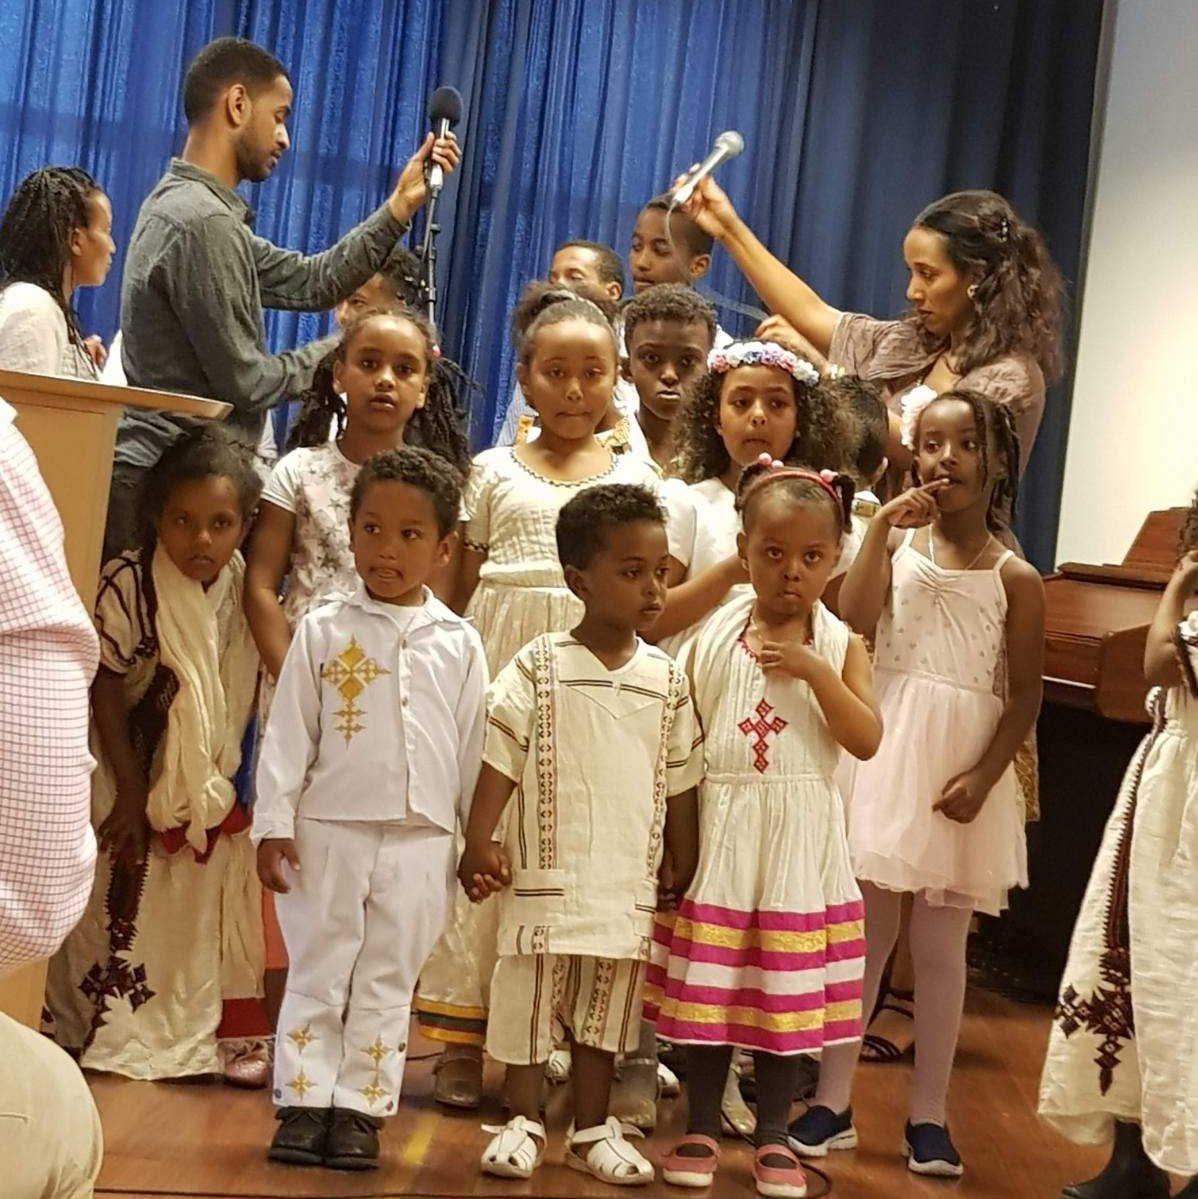 children ministry2